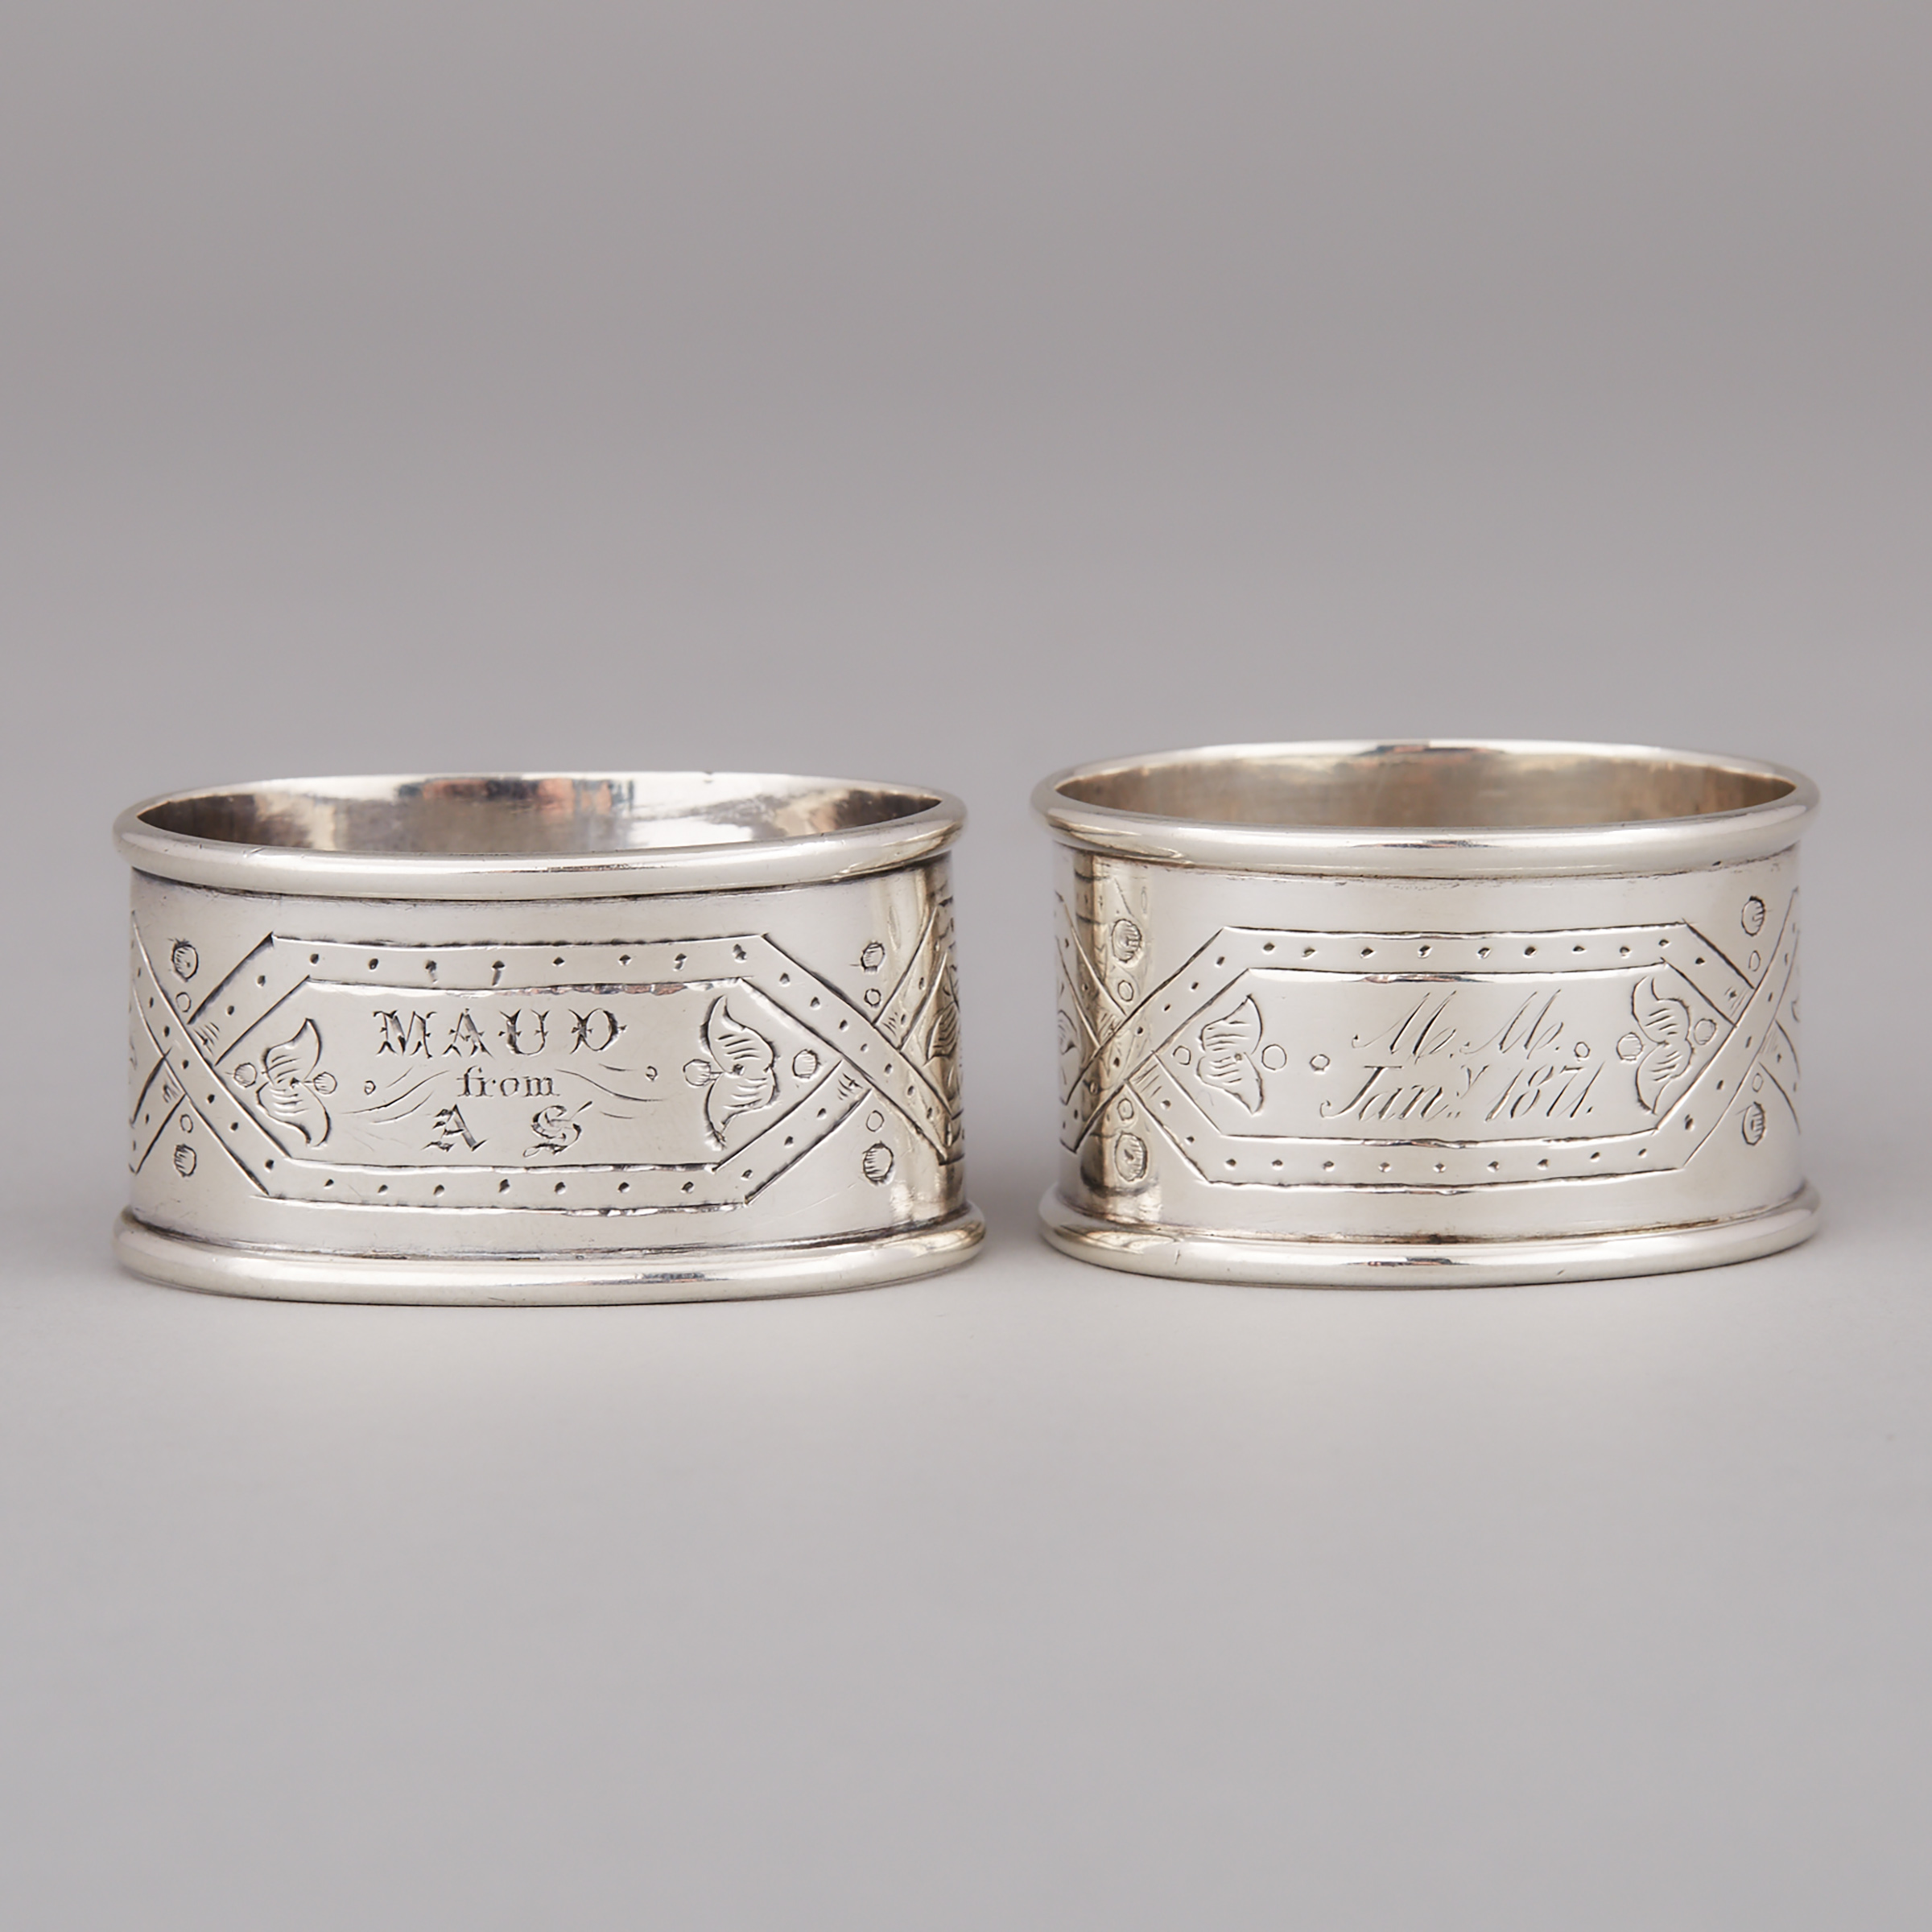 Pair of Canadian Silver Napkin Rings, J.G. Joseph & Co., Toronto, Ont., c.1871